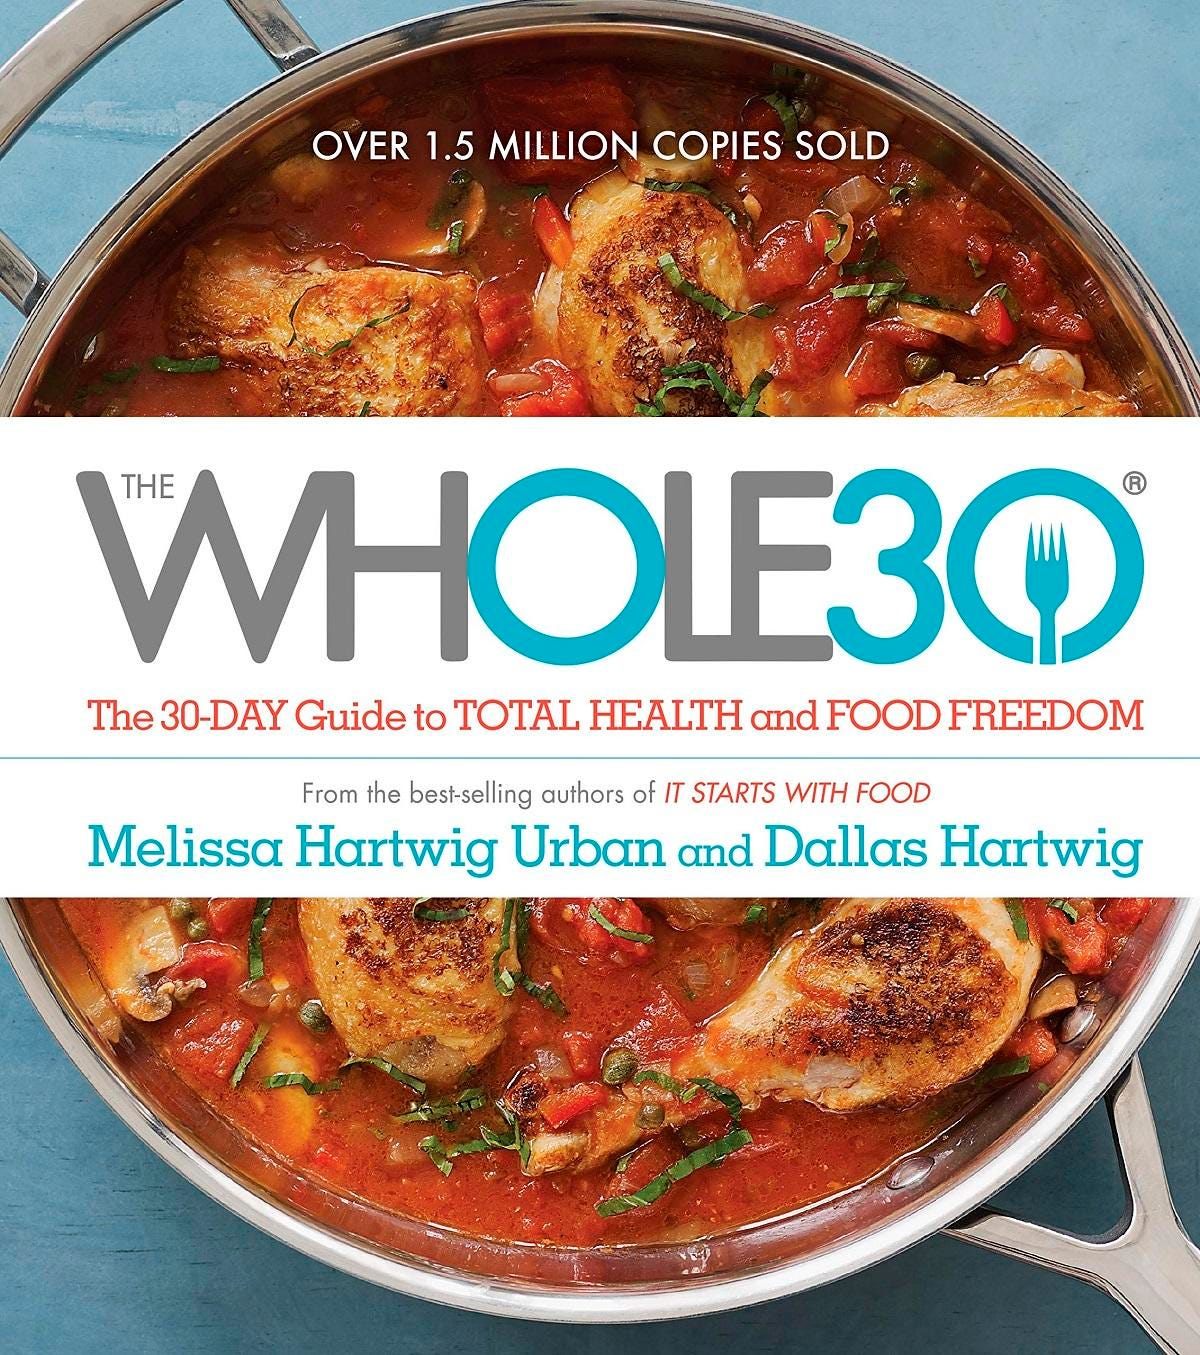 Whole30 cookbook